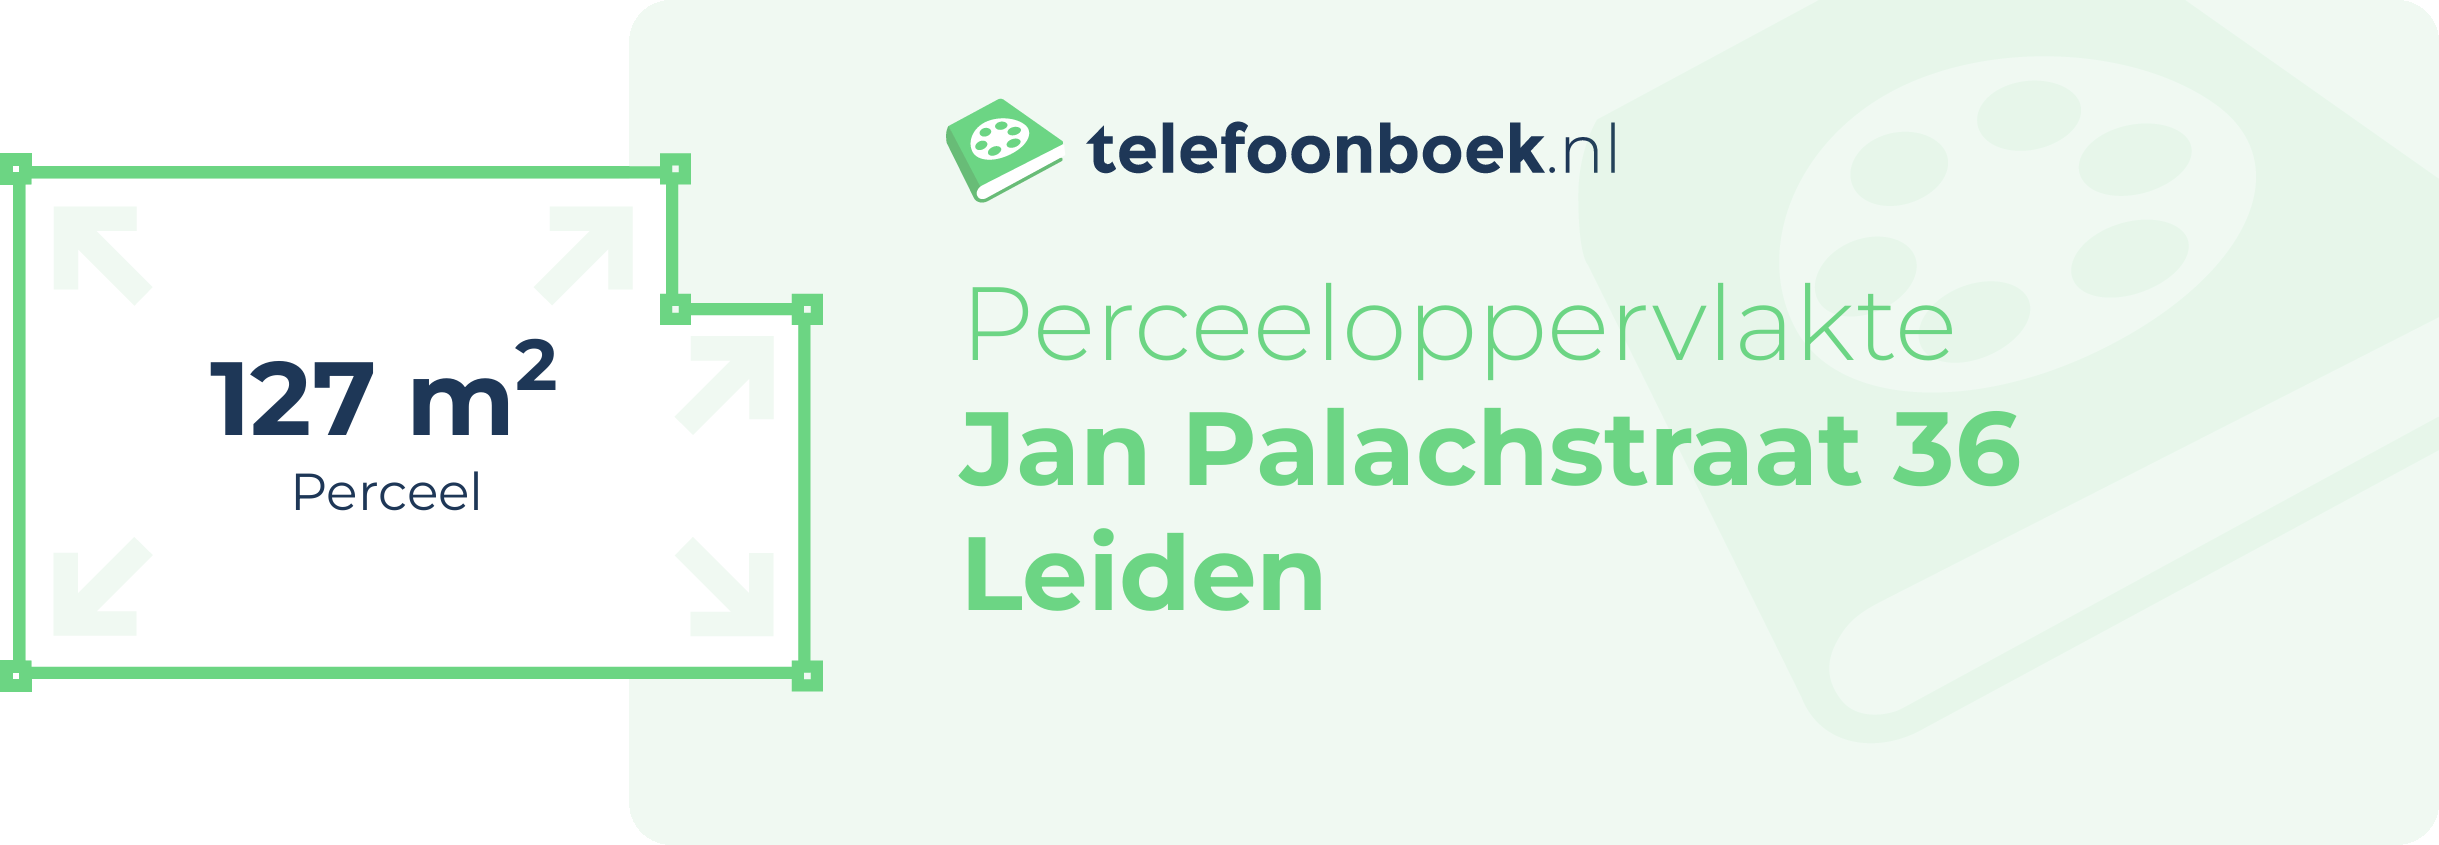 Perceeloppervlakte Jan Palachstraat 36 Leiden